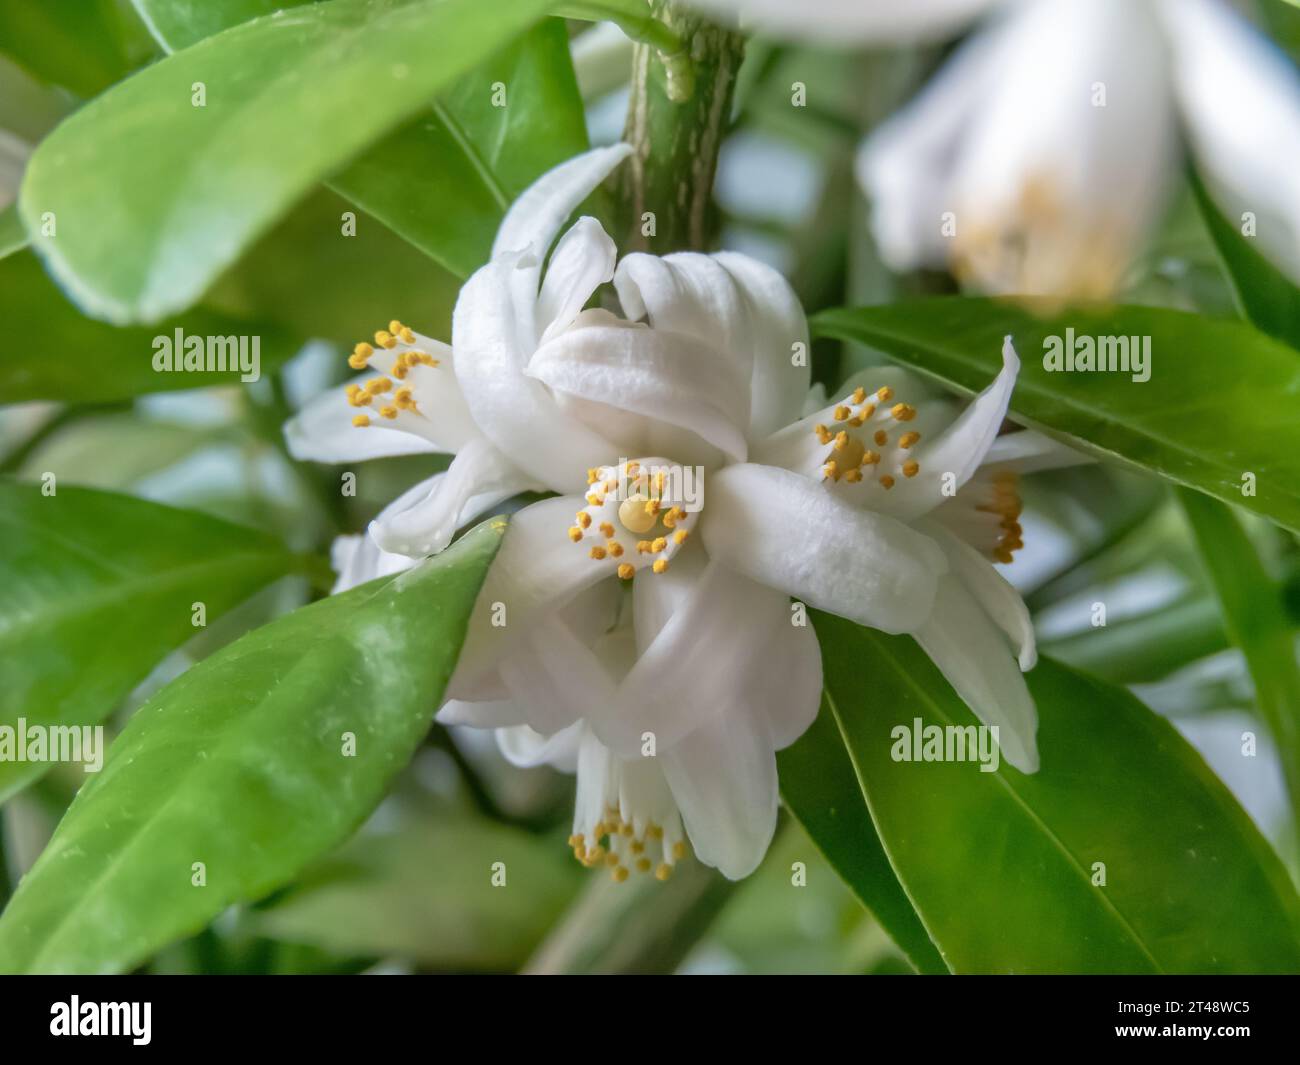 Calamansi or calamondin fruit flowers and leaves branch. Citrus hybrid blossom. Philippine lime or lemon. Stock Photo